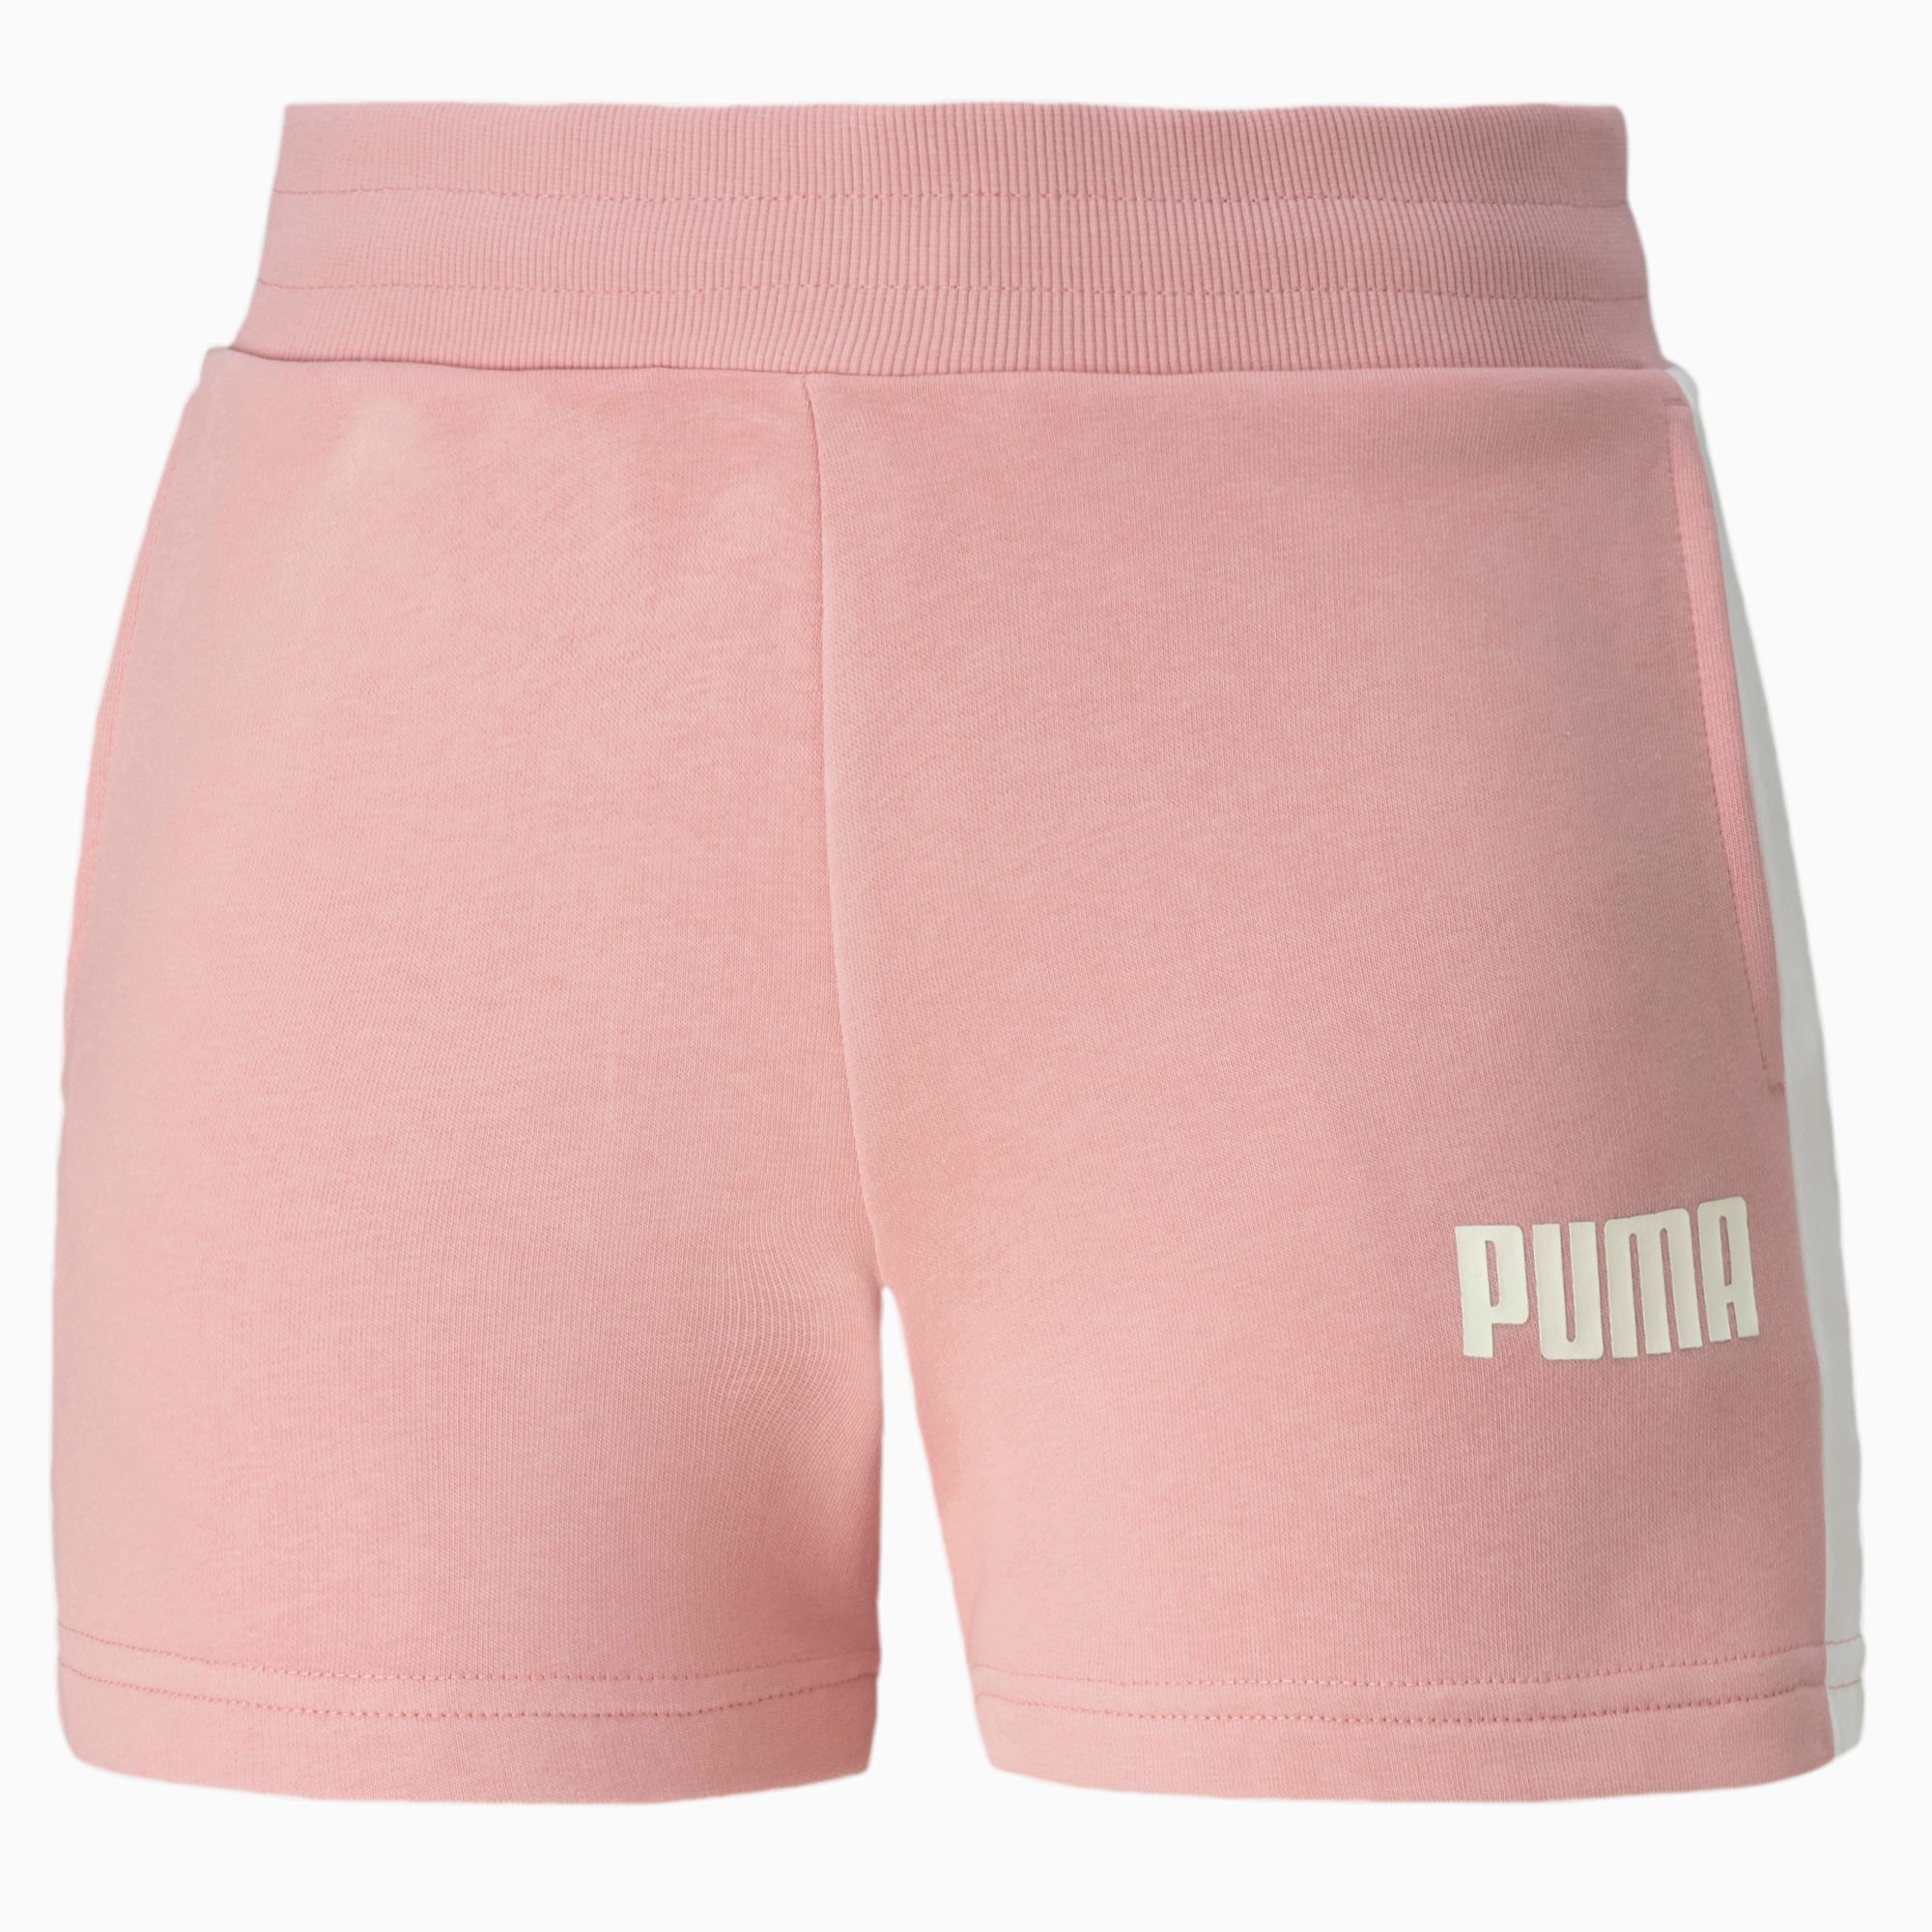 puma womens shorts